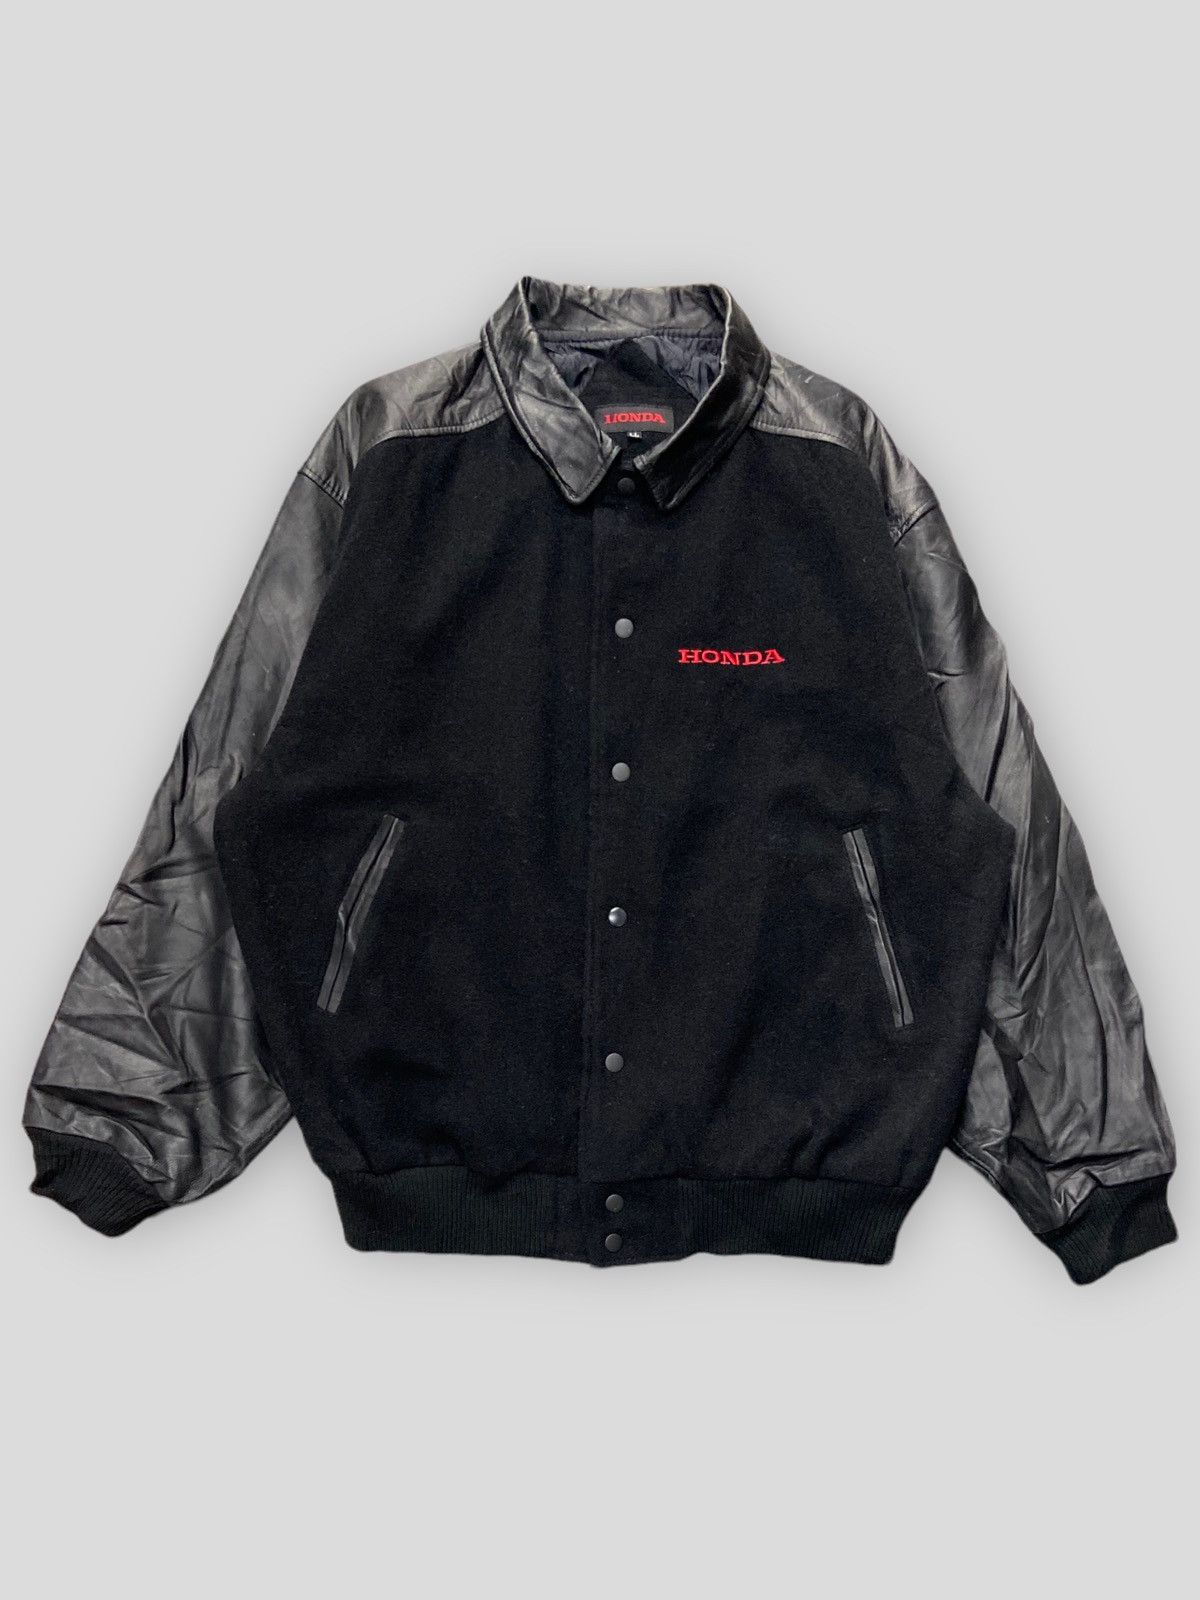 Vintage Vintage 90s Honda Racing Team Wool Leather Varsity Jacket | Grailed